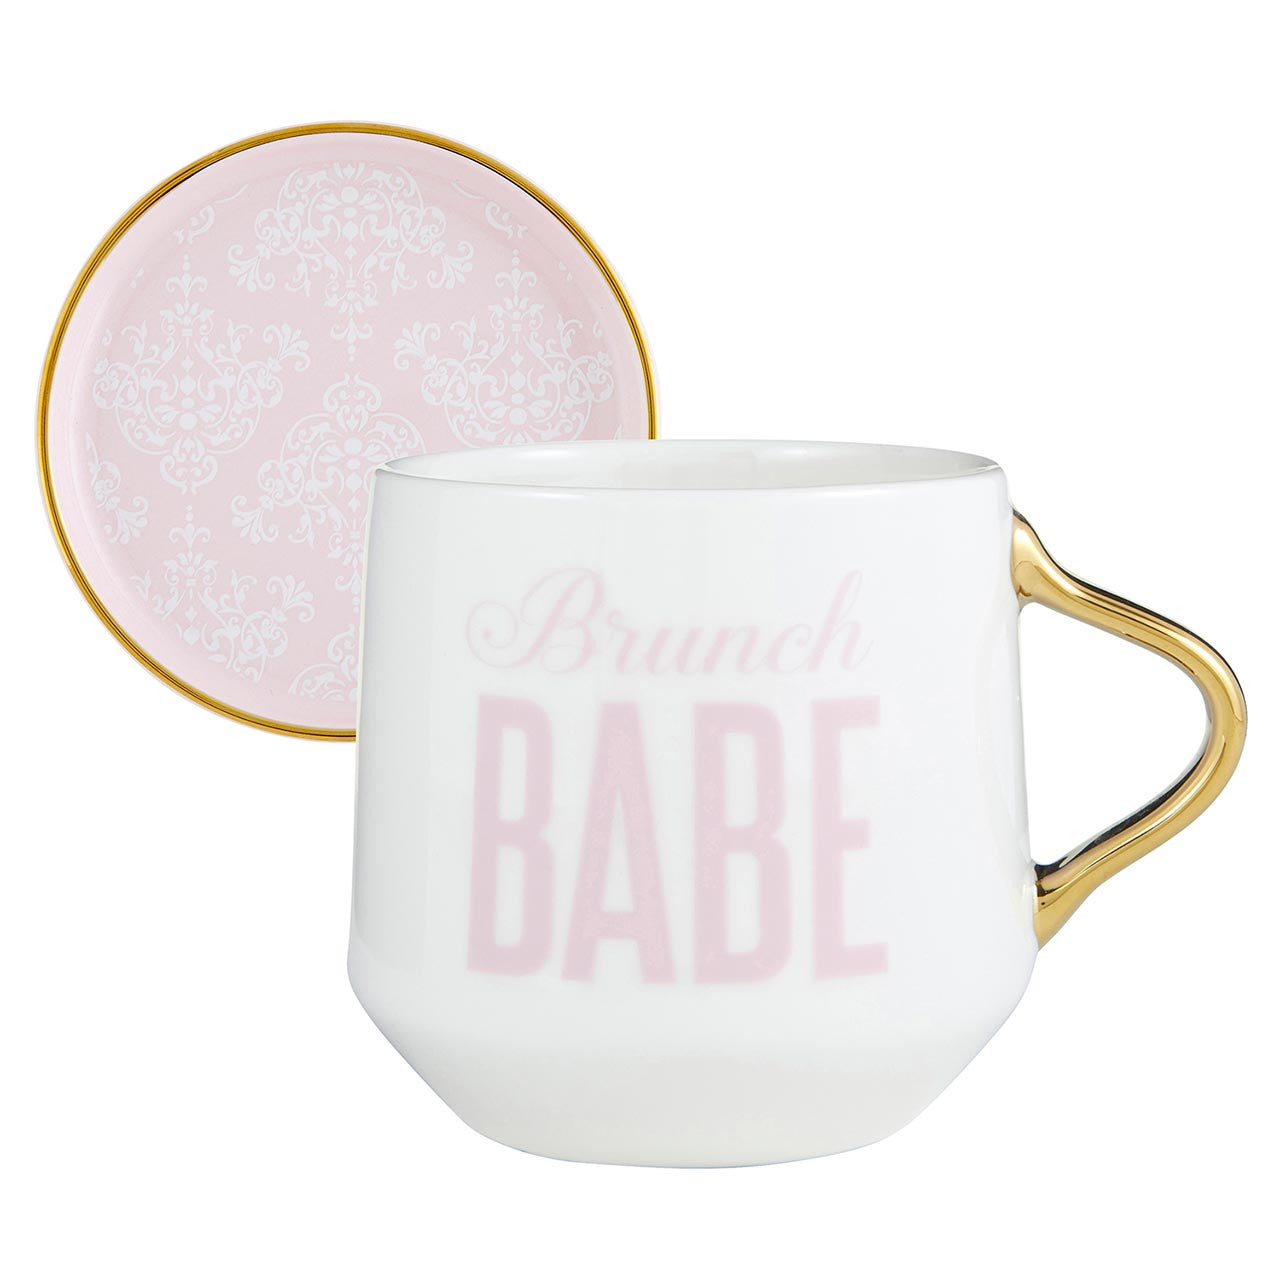 Brunch Babe Mug & Coaster Lid | Ceramic Coffee Tea Cup with Lid Gift Set